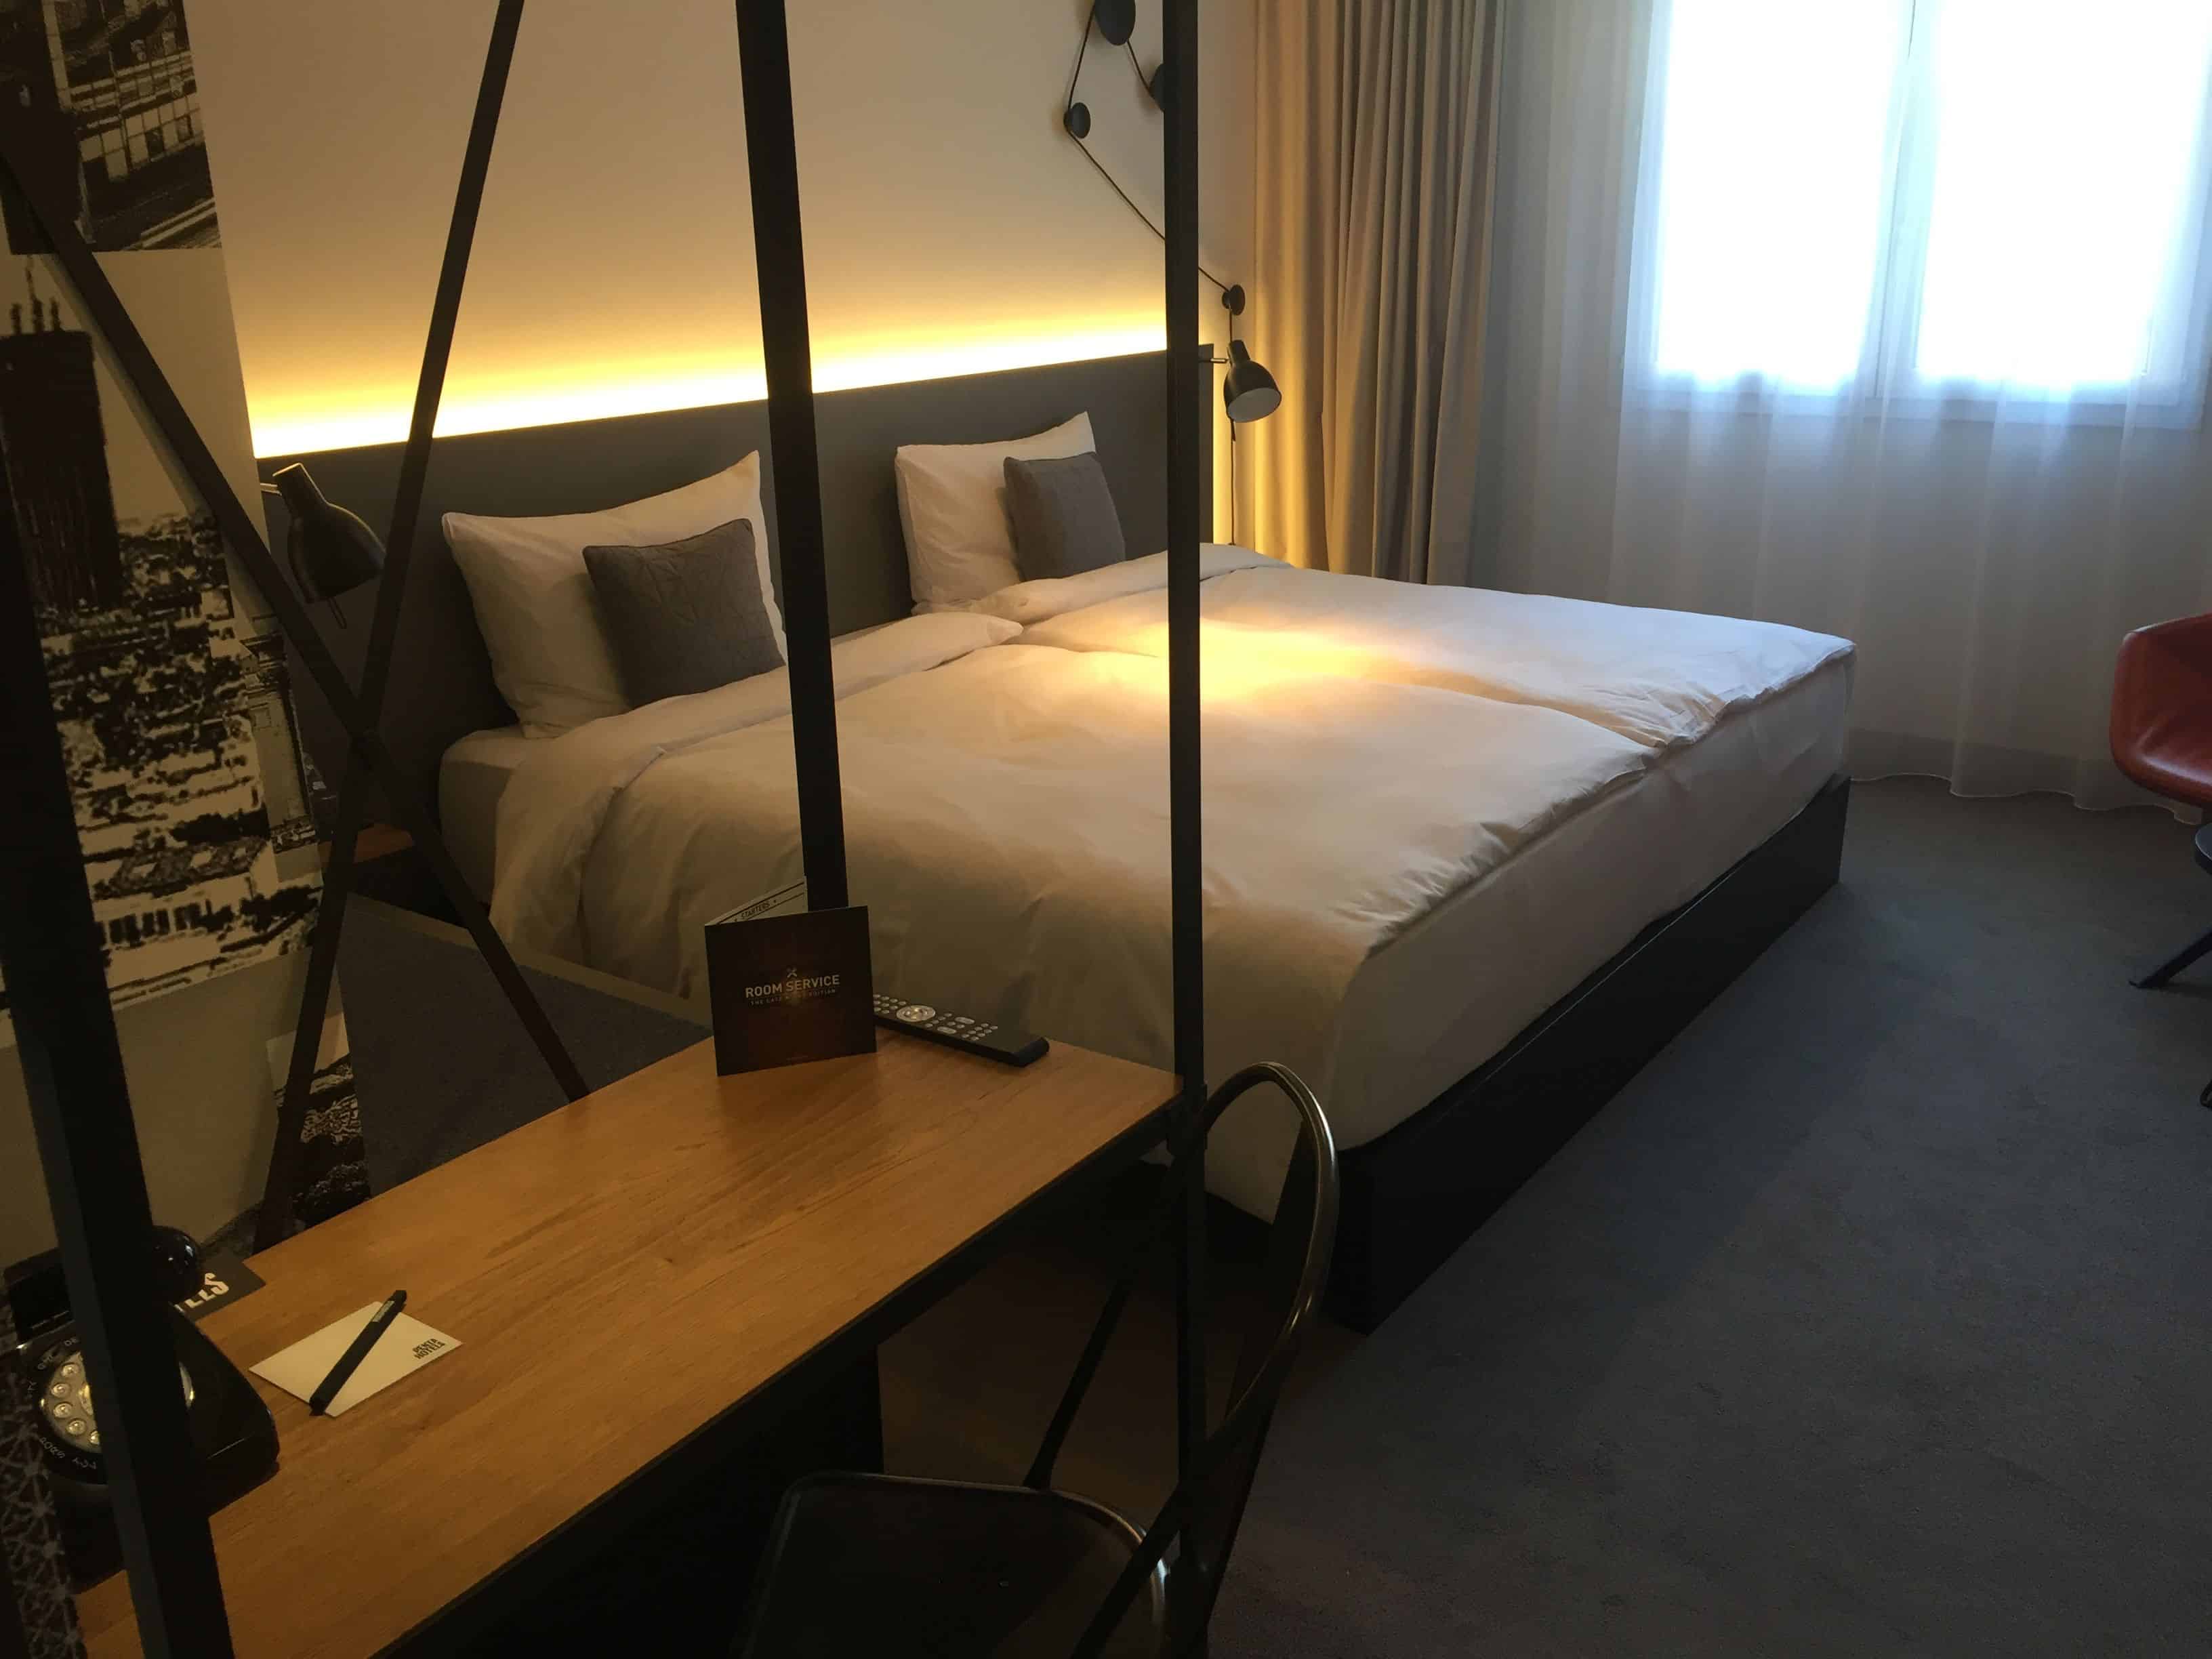 Cozy room design with industrial accents - v3 pentahotel Paris